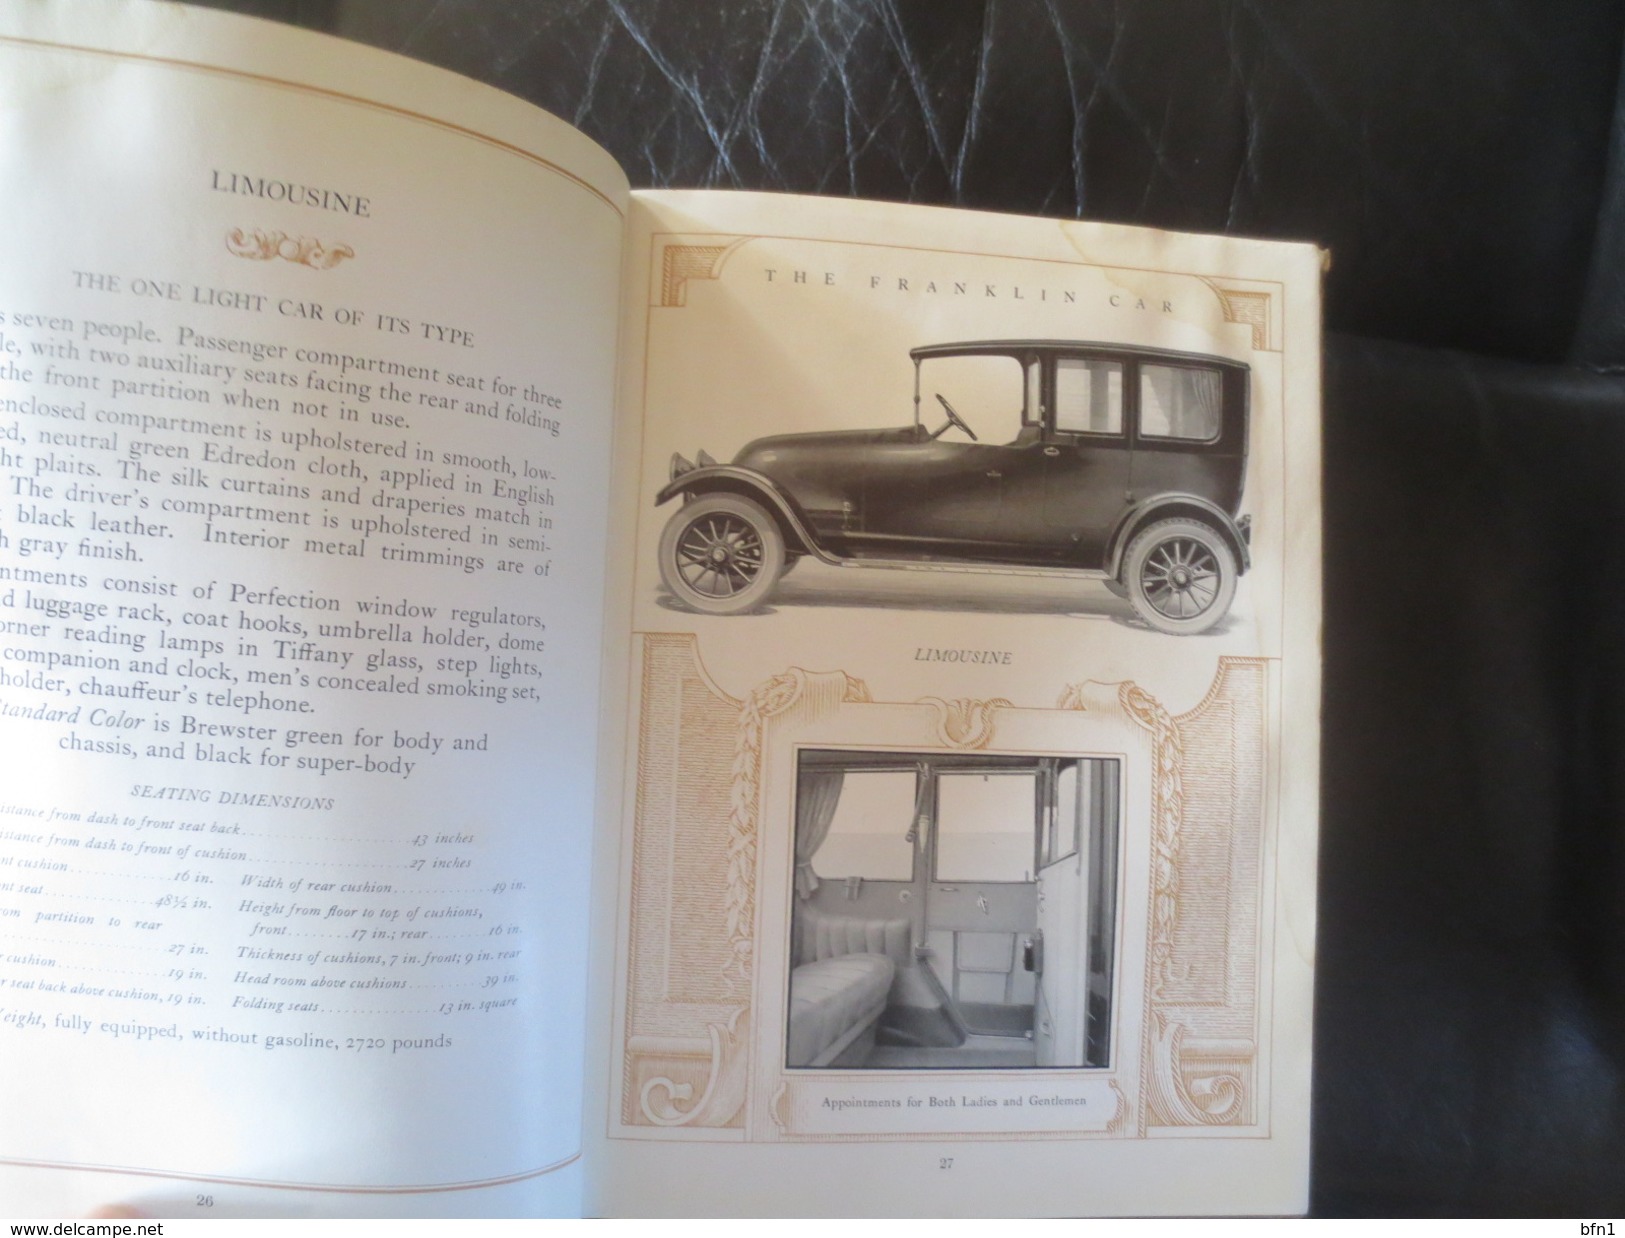 THE FRANKLIN CAR - 1918-PRINCIPLES OF CONSTRUCTION - PERFORMANCE AND MECHANICAL DETAILS- VOIR PHOTOS